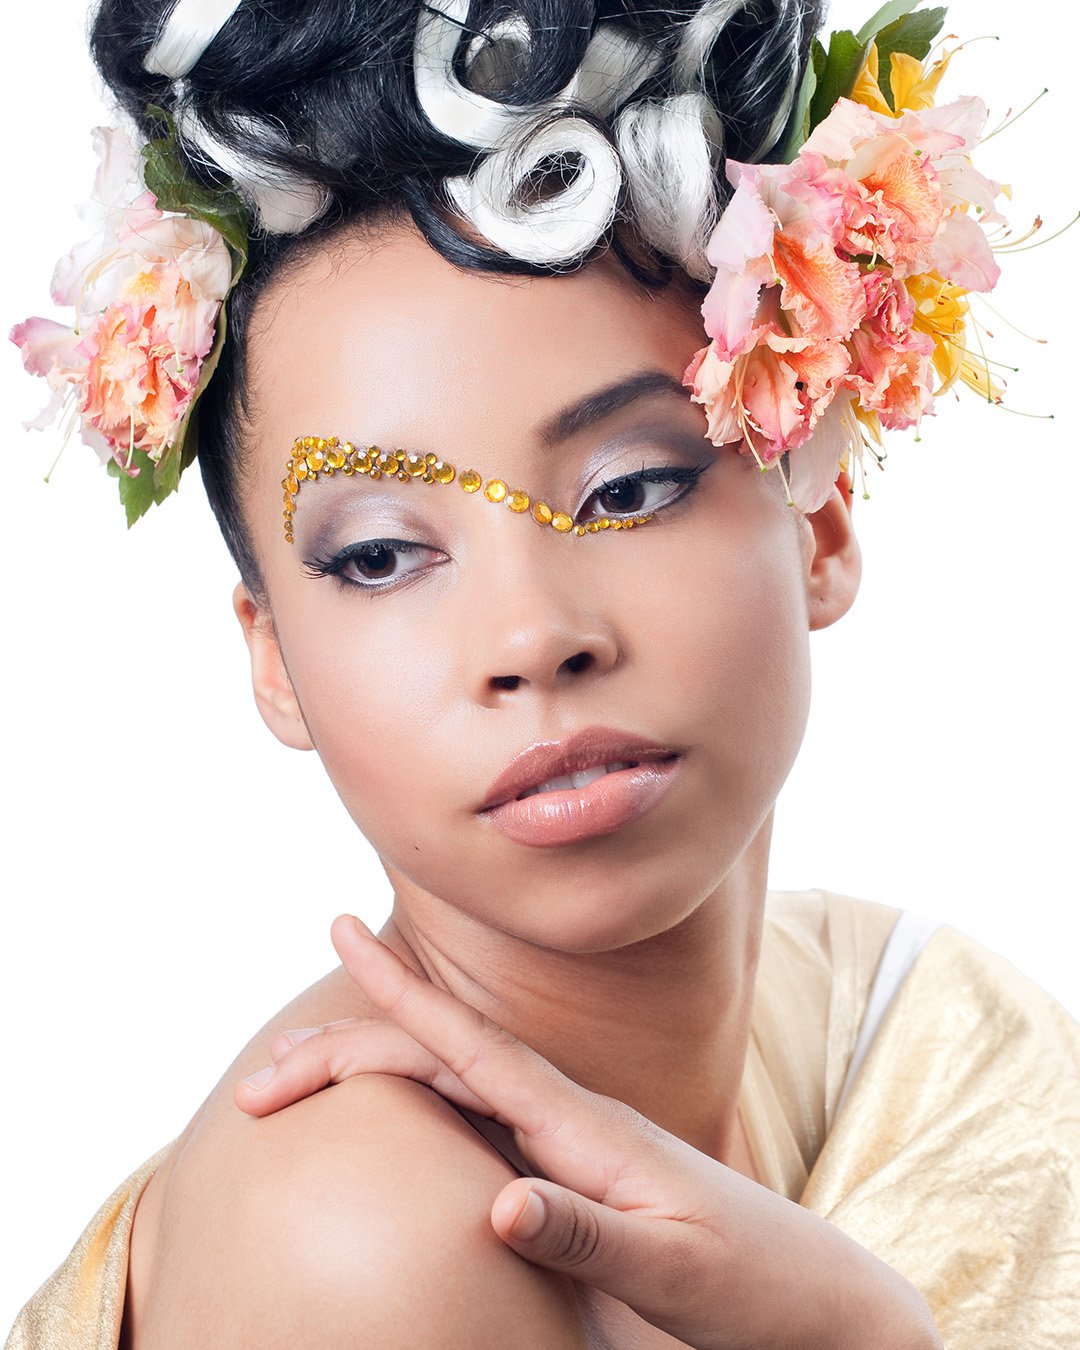 black bride makeup ideas natural light makeup with gold rhinesstones shutterstock